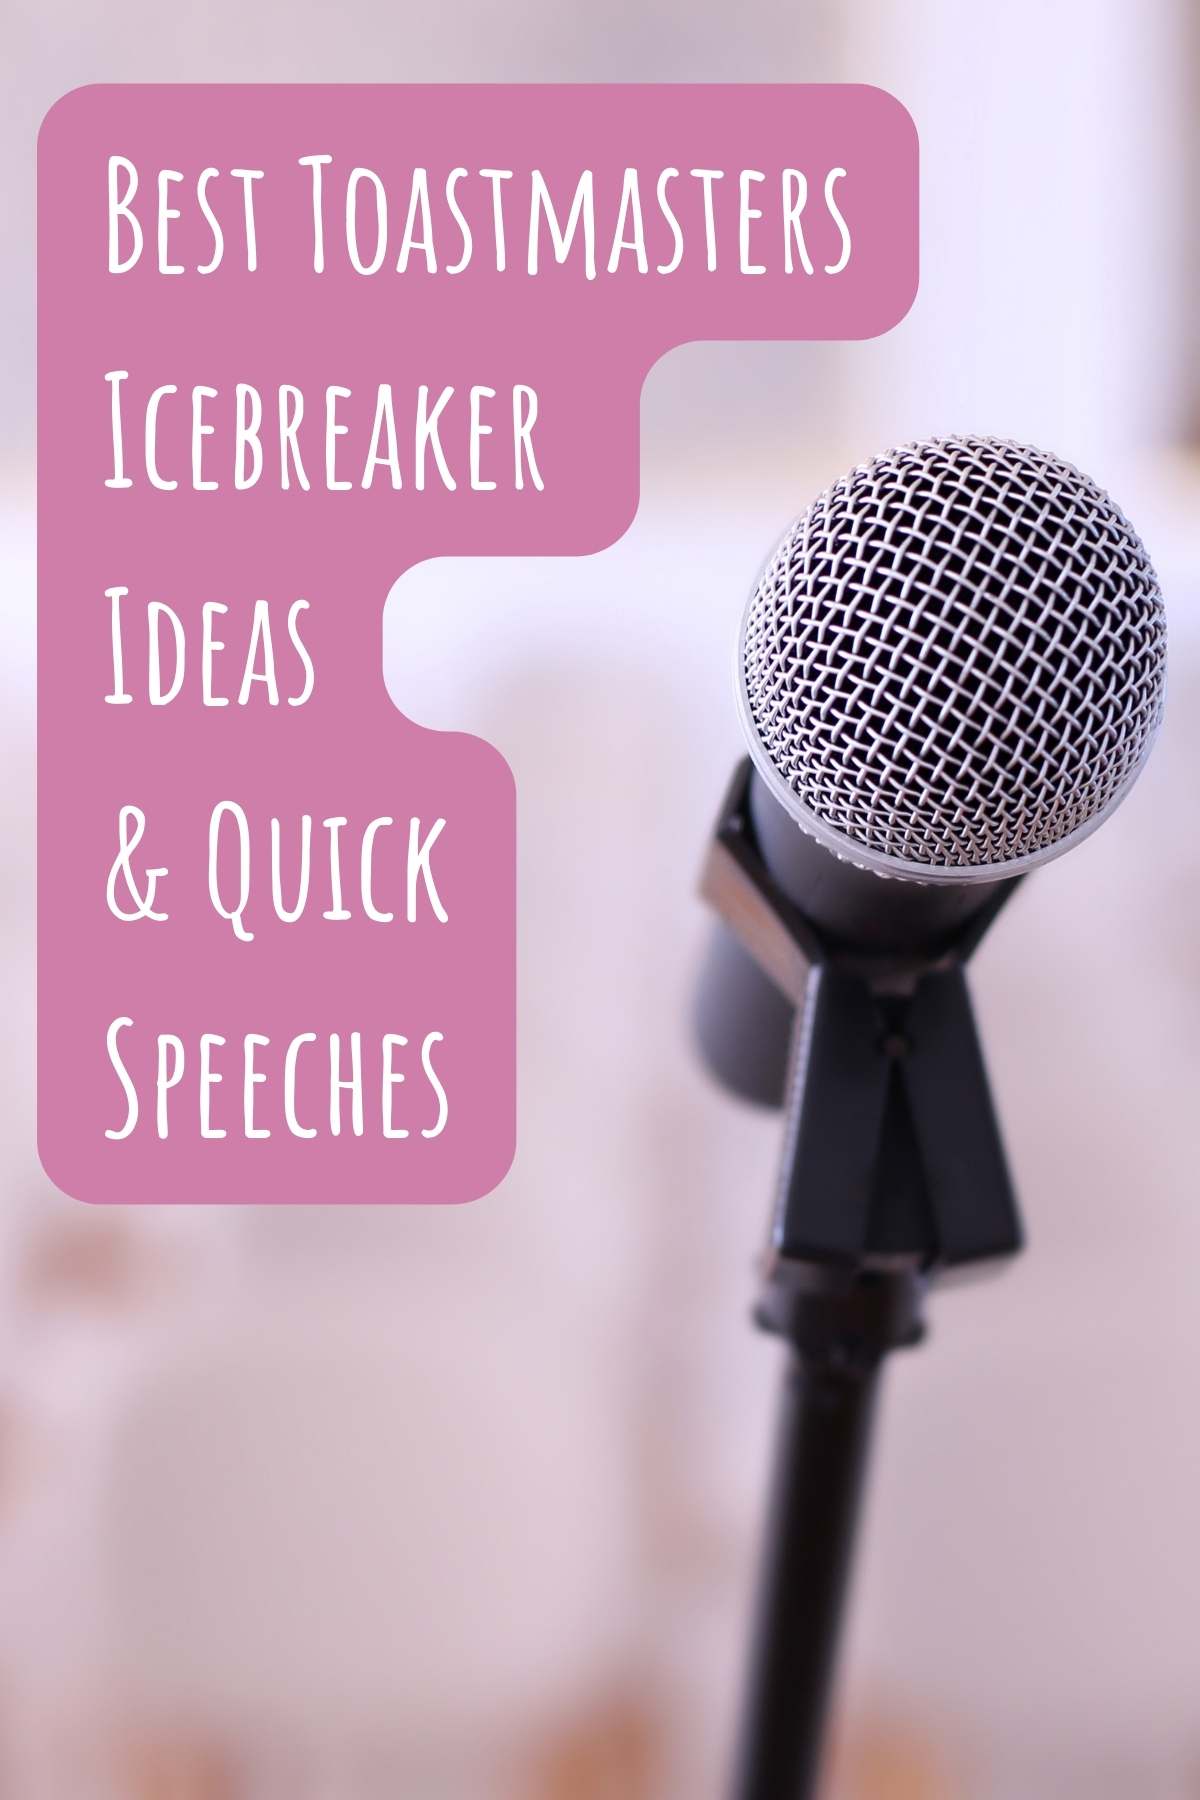 Best Toastmasters icebreaker Ideas & quick speeches. Photo of microphone.